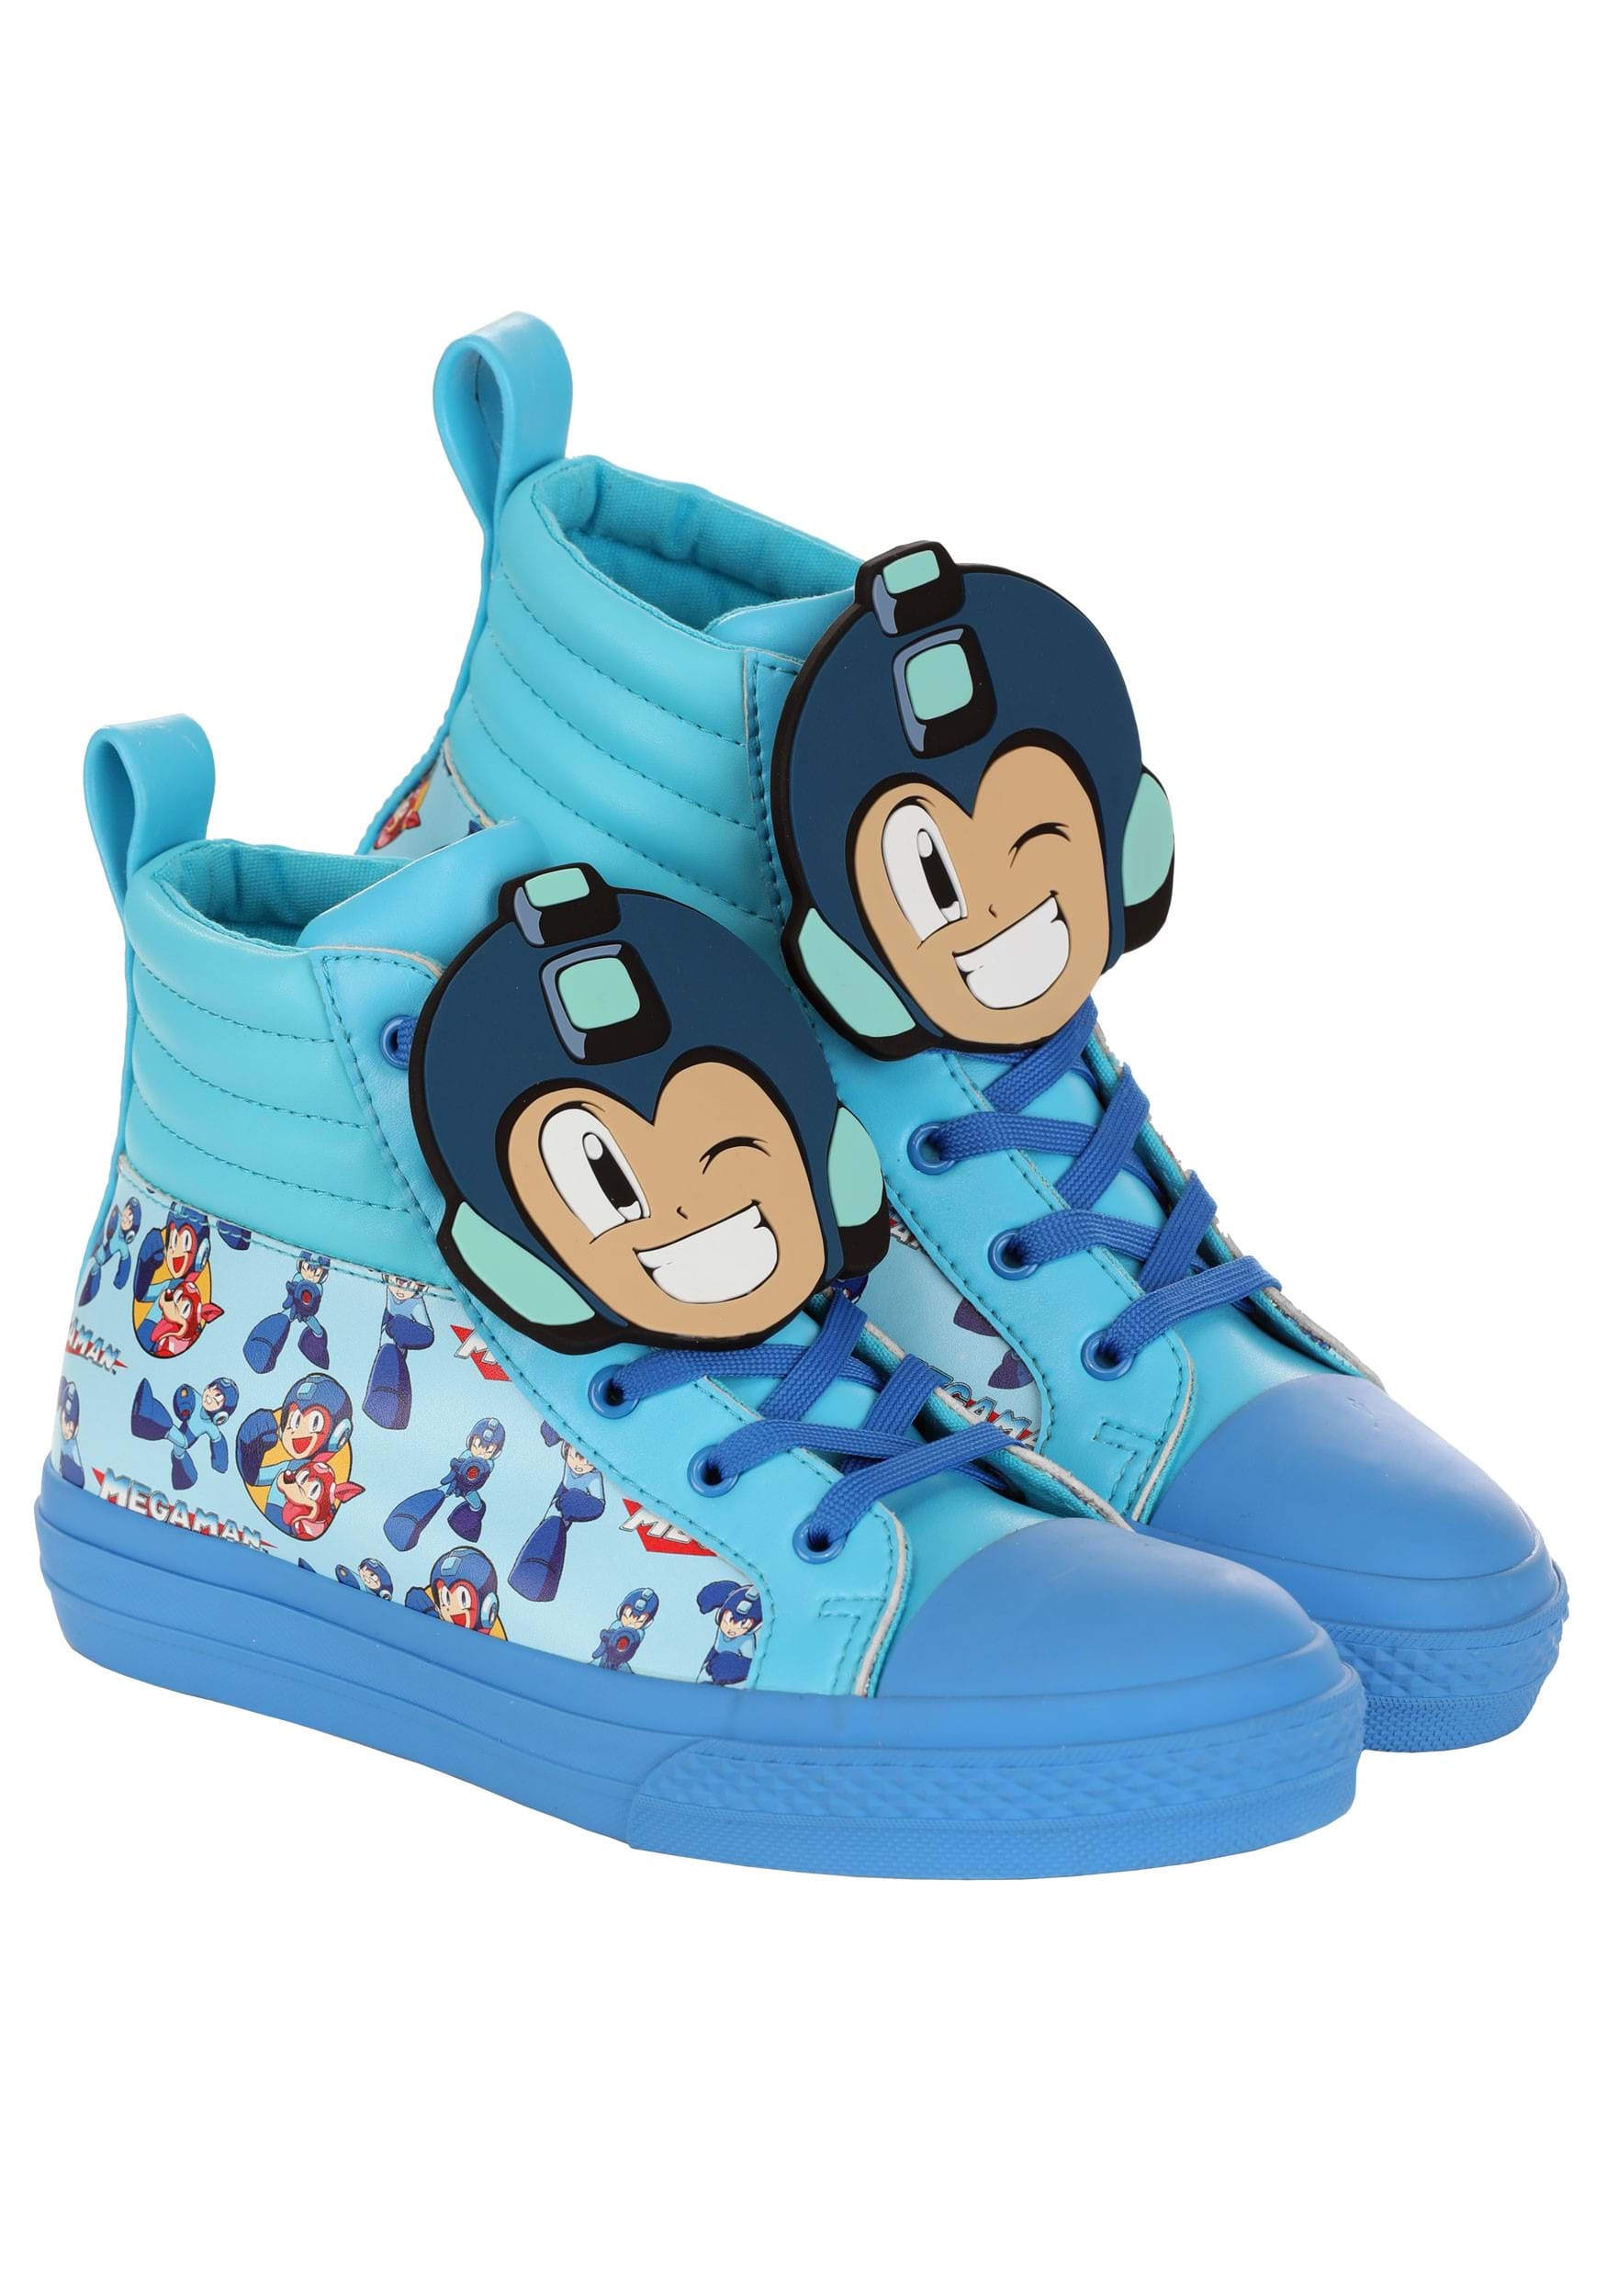 Adult Mega Man High Top Sneaker | Mega Man Gifts